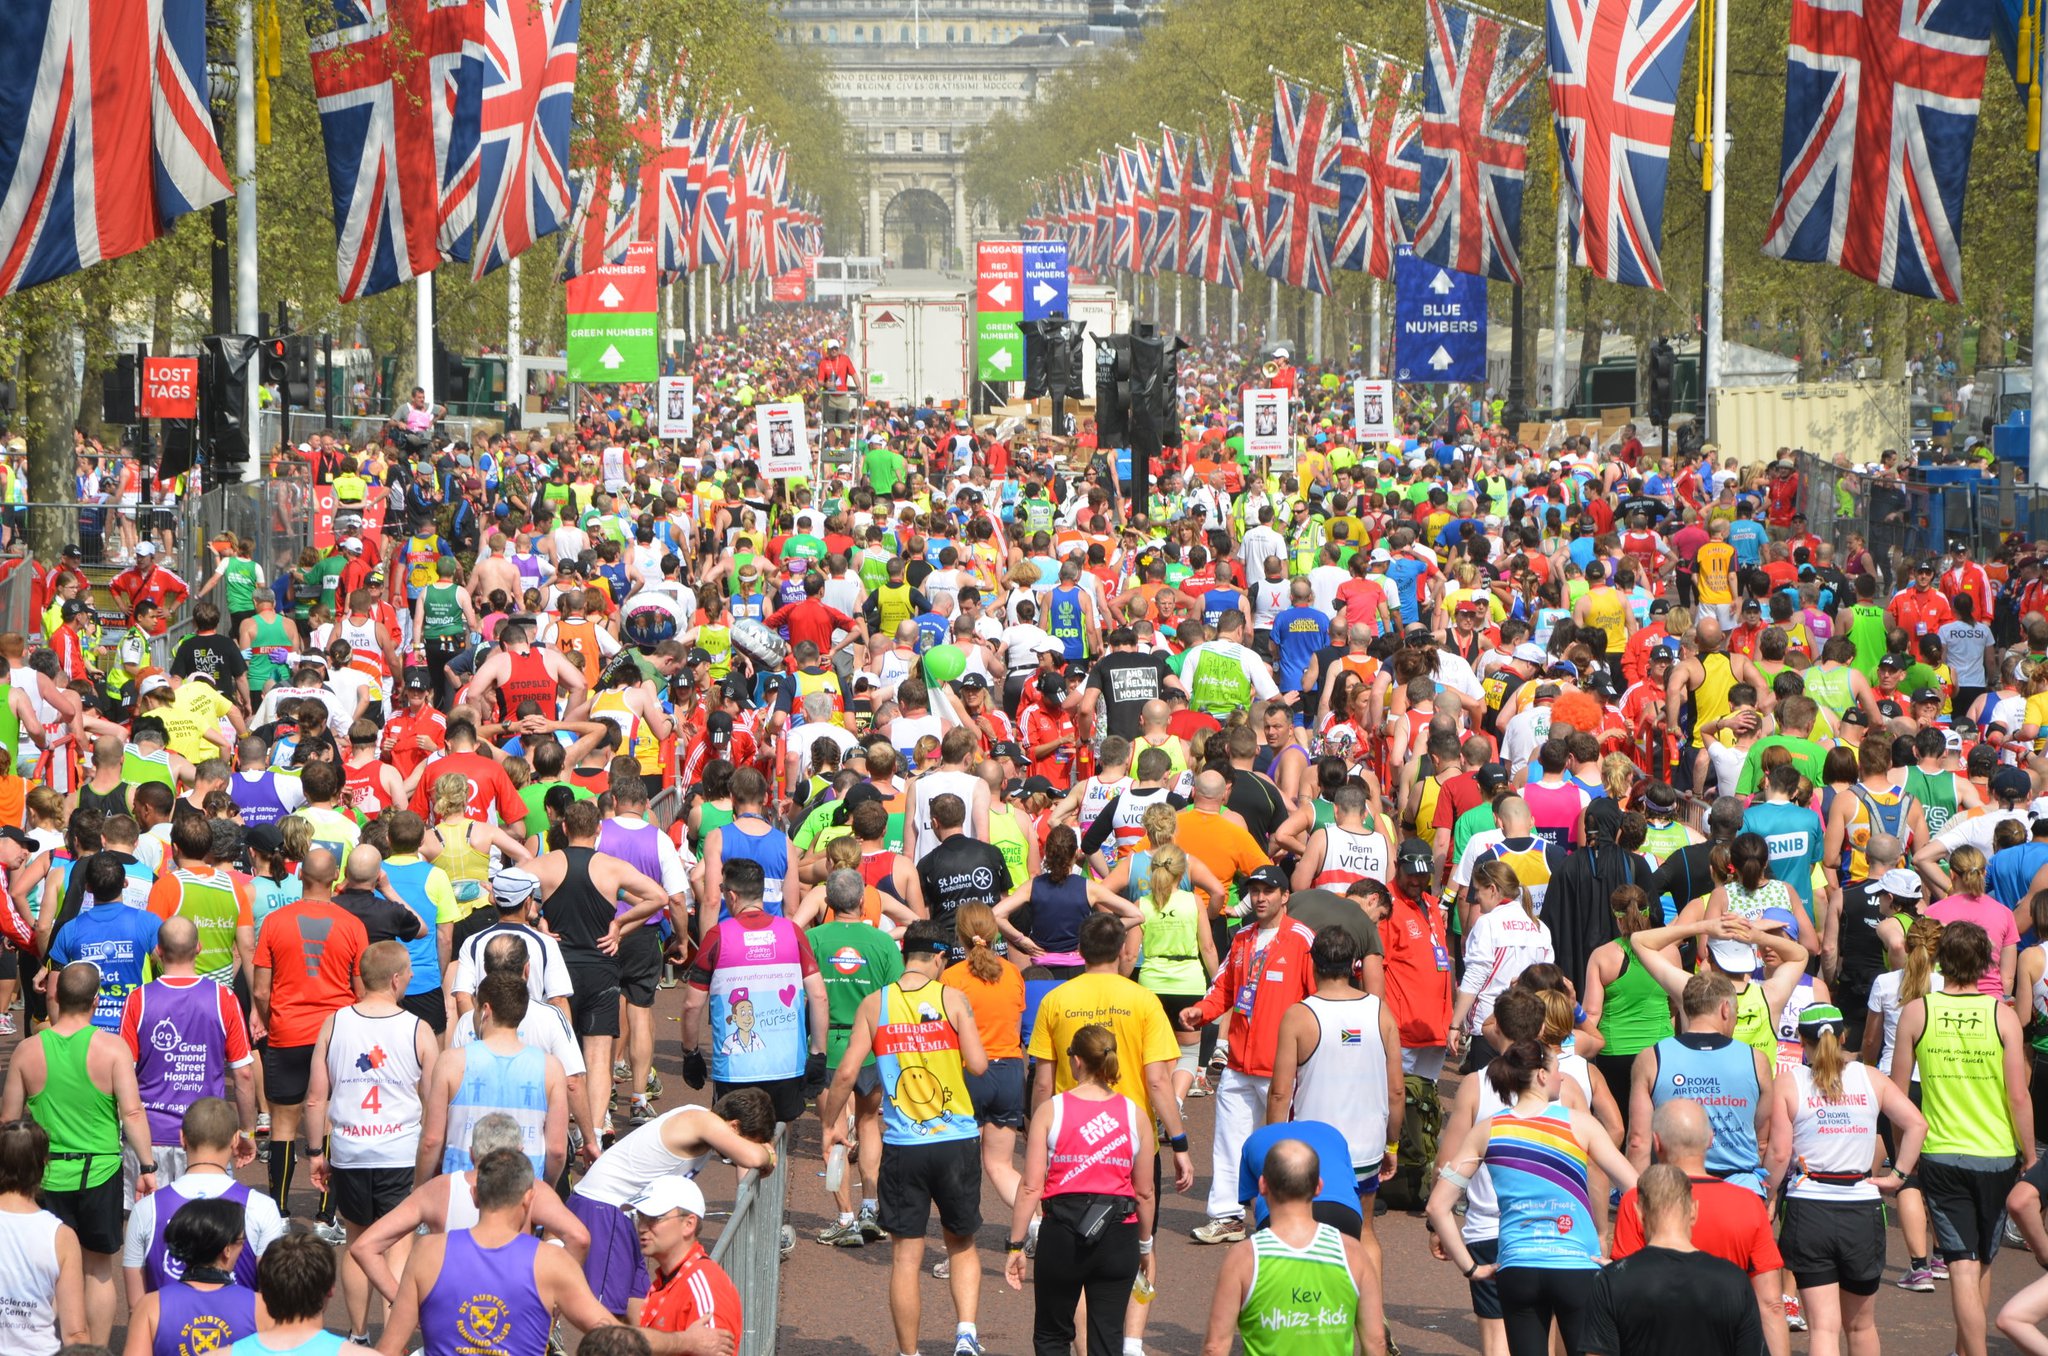 TCS London Marathon 